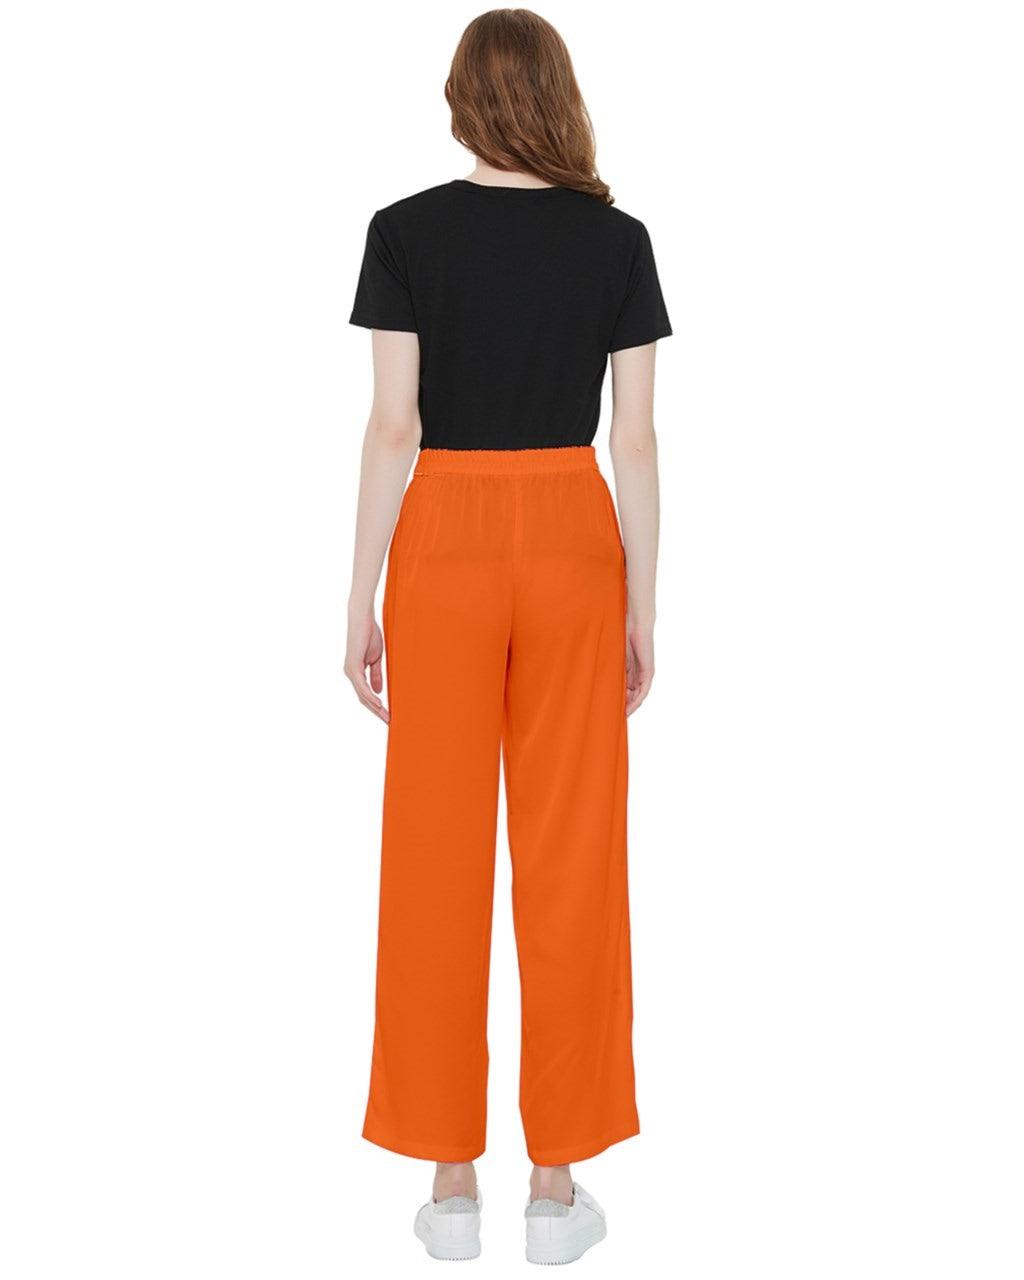 Mandra Orange Bootcut Pants - Blissfully Brand